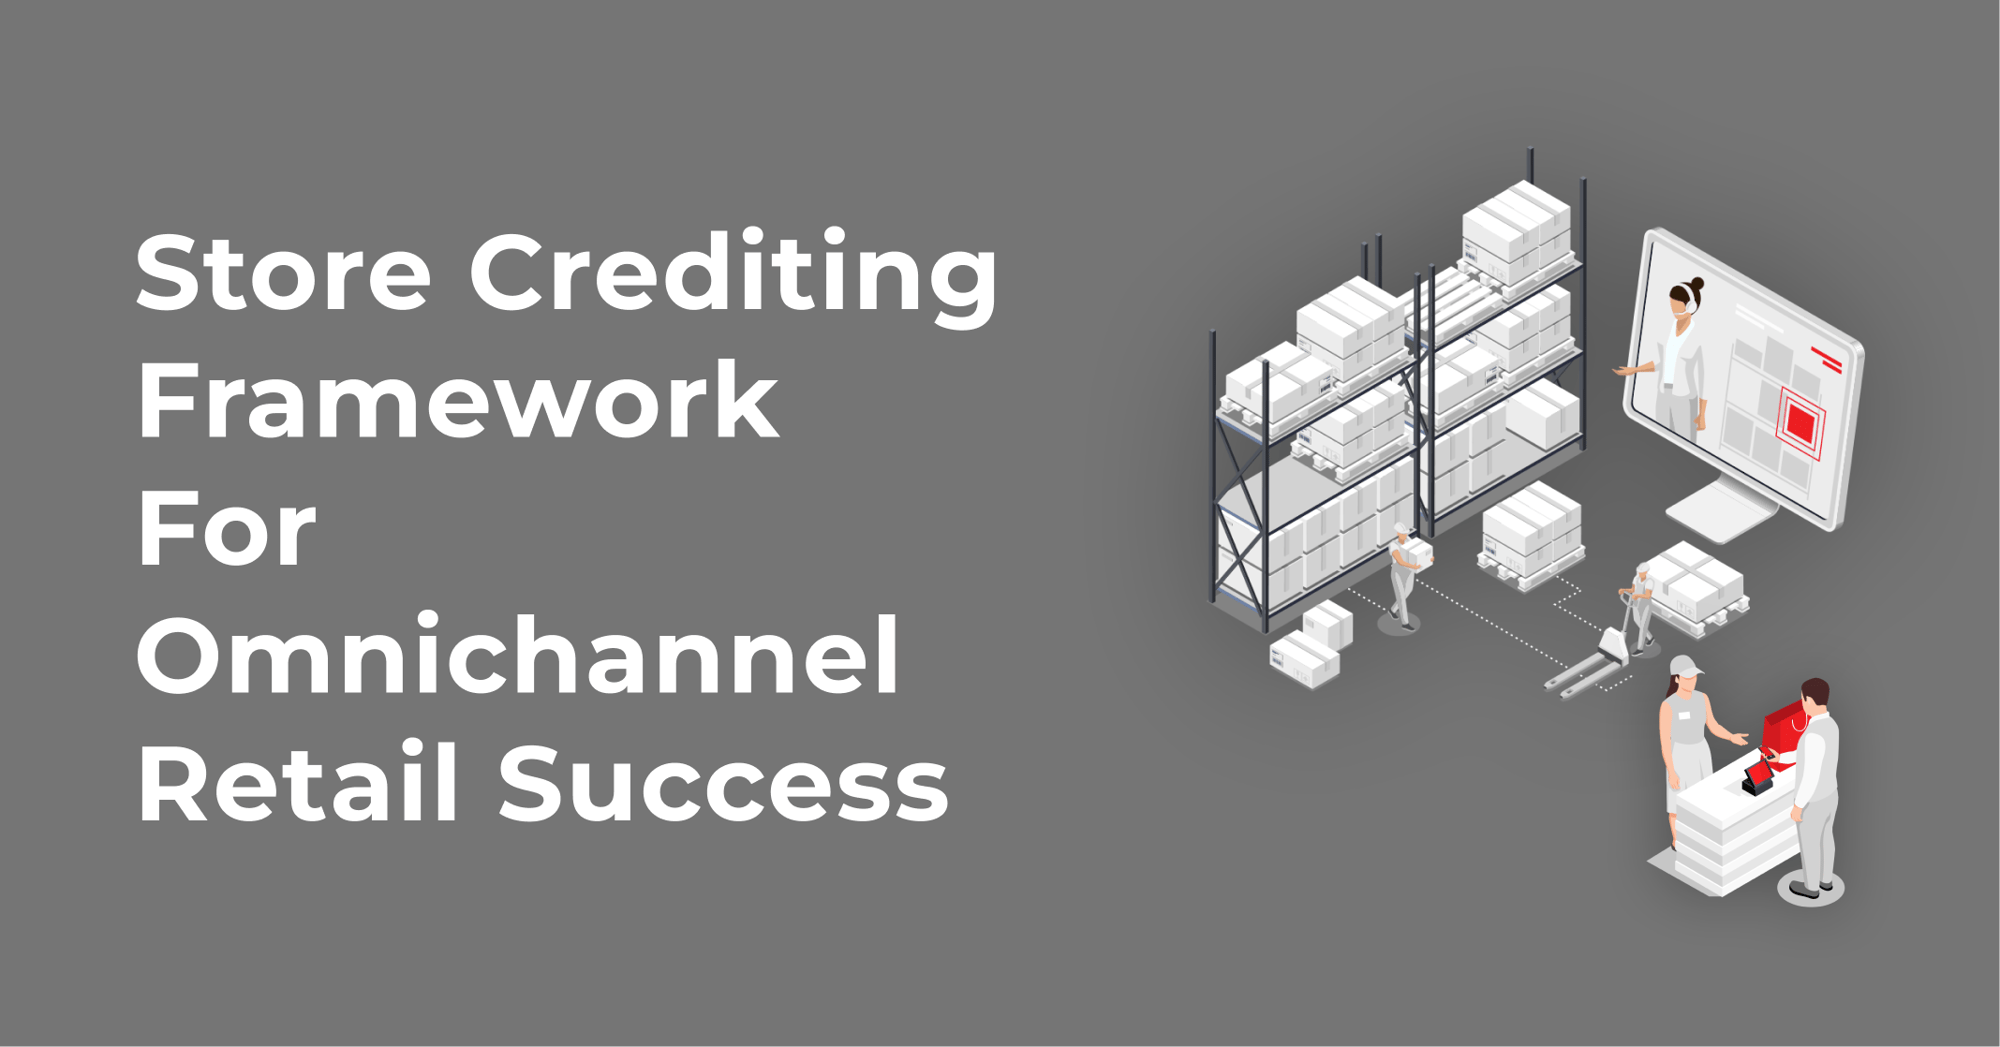 Store crediting framework